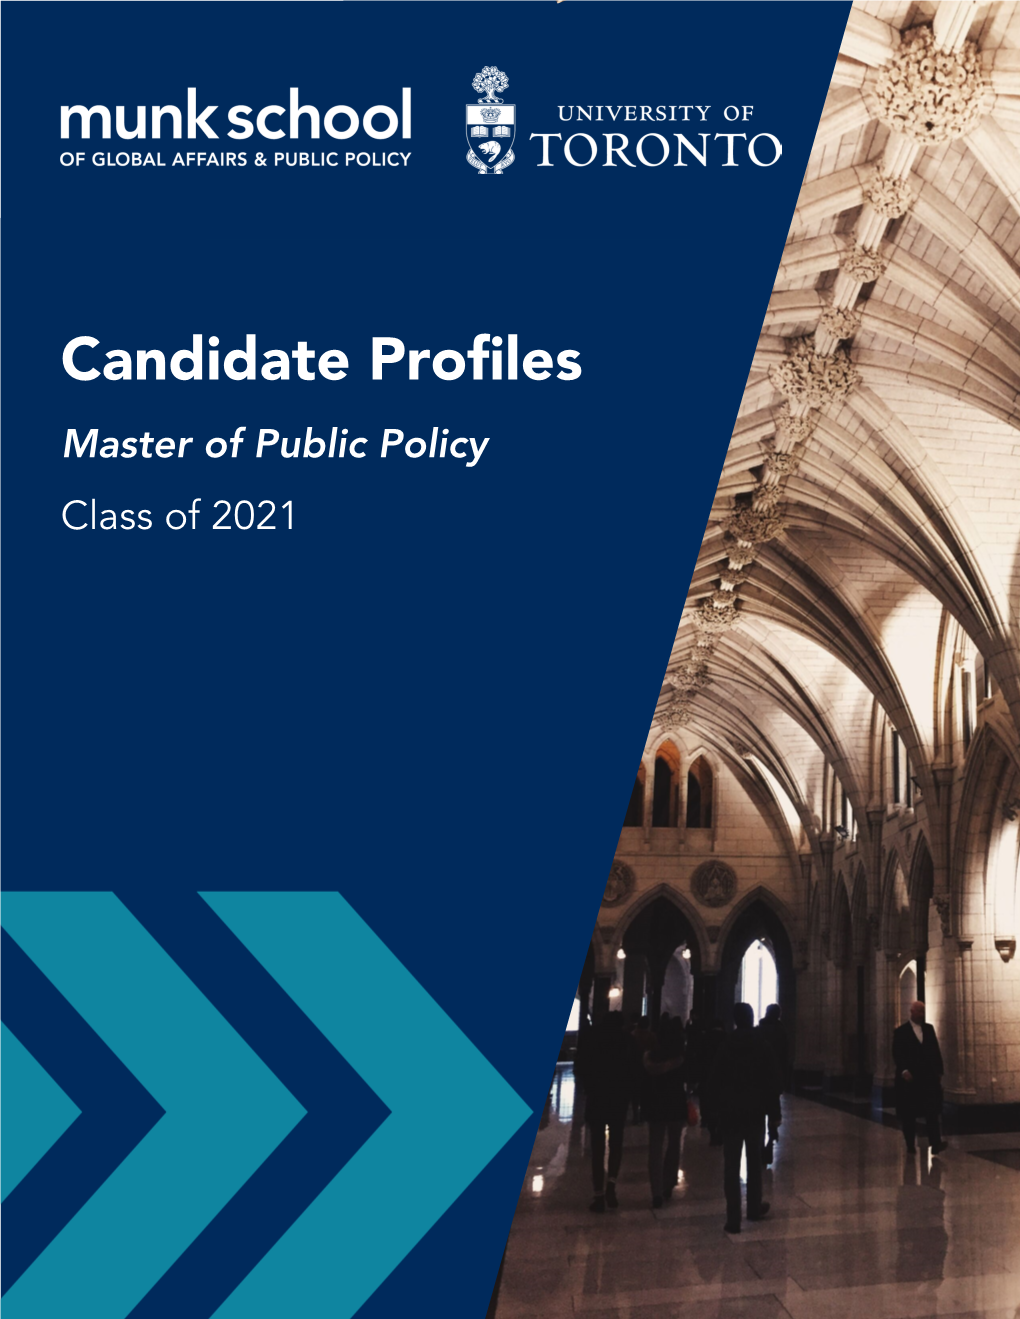 Candidate Profiles Cmaasntedr Oidf Pautbelic Pporloicyfiles Class of 2021 Master of Public Policy